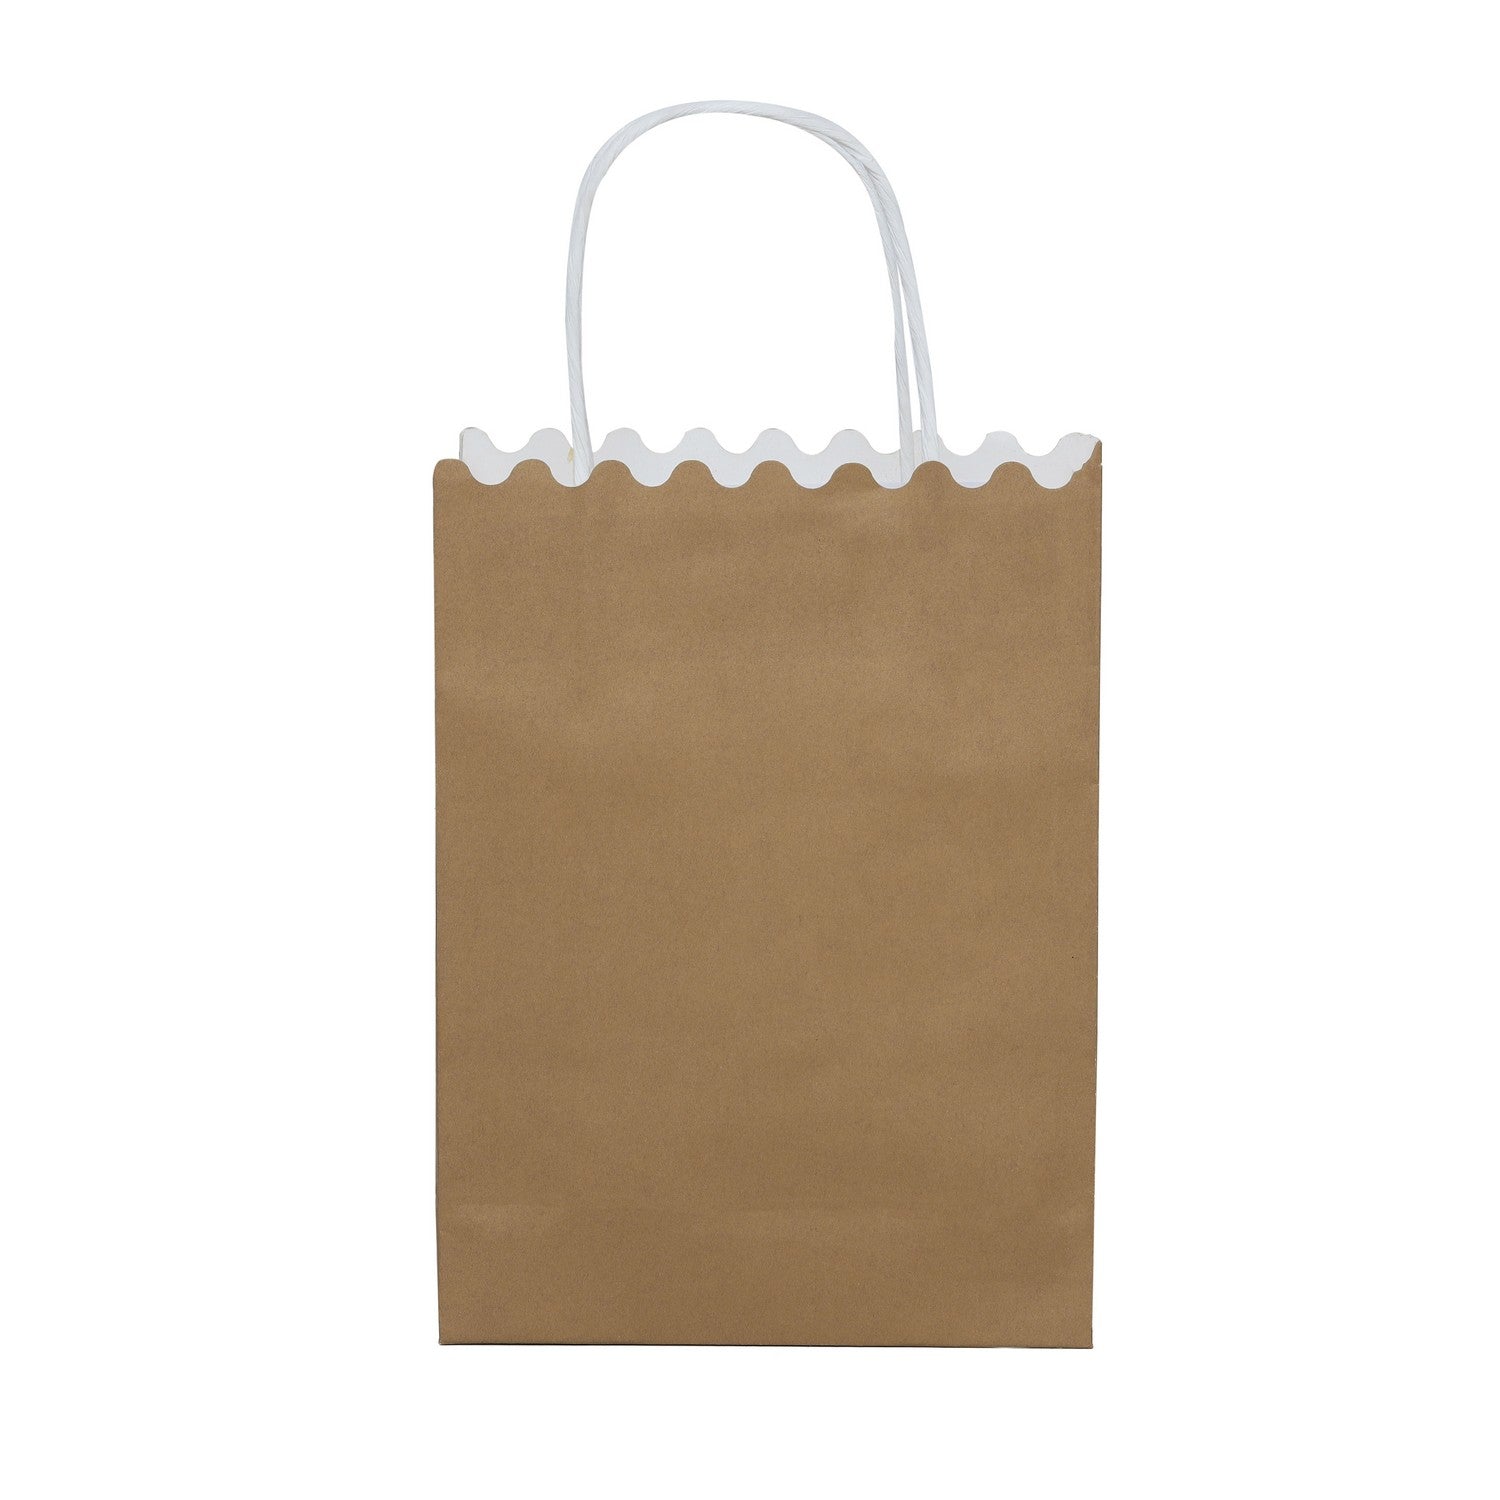 SHUBAN Plain Paper Bag for Gifting, Weddings, Anniversary, Birthday, Holiday Presents (24.5 X 18 X 8 CM ) - Set of 5 | Book Bargain Buy